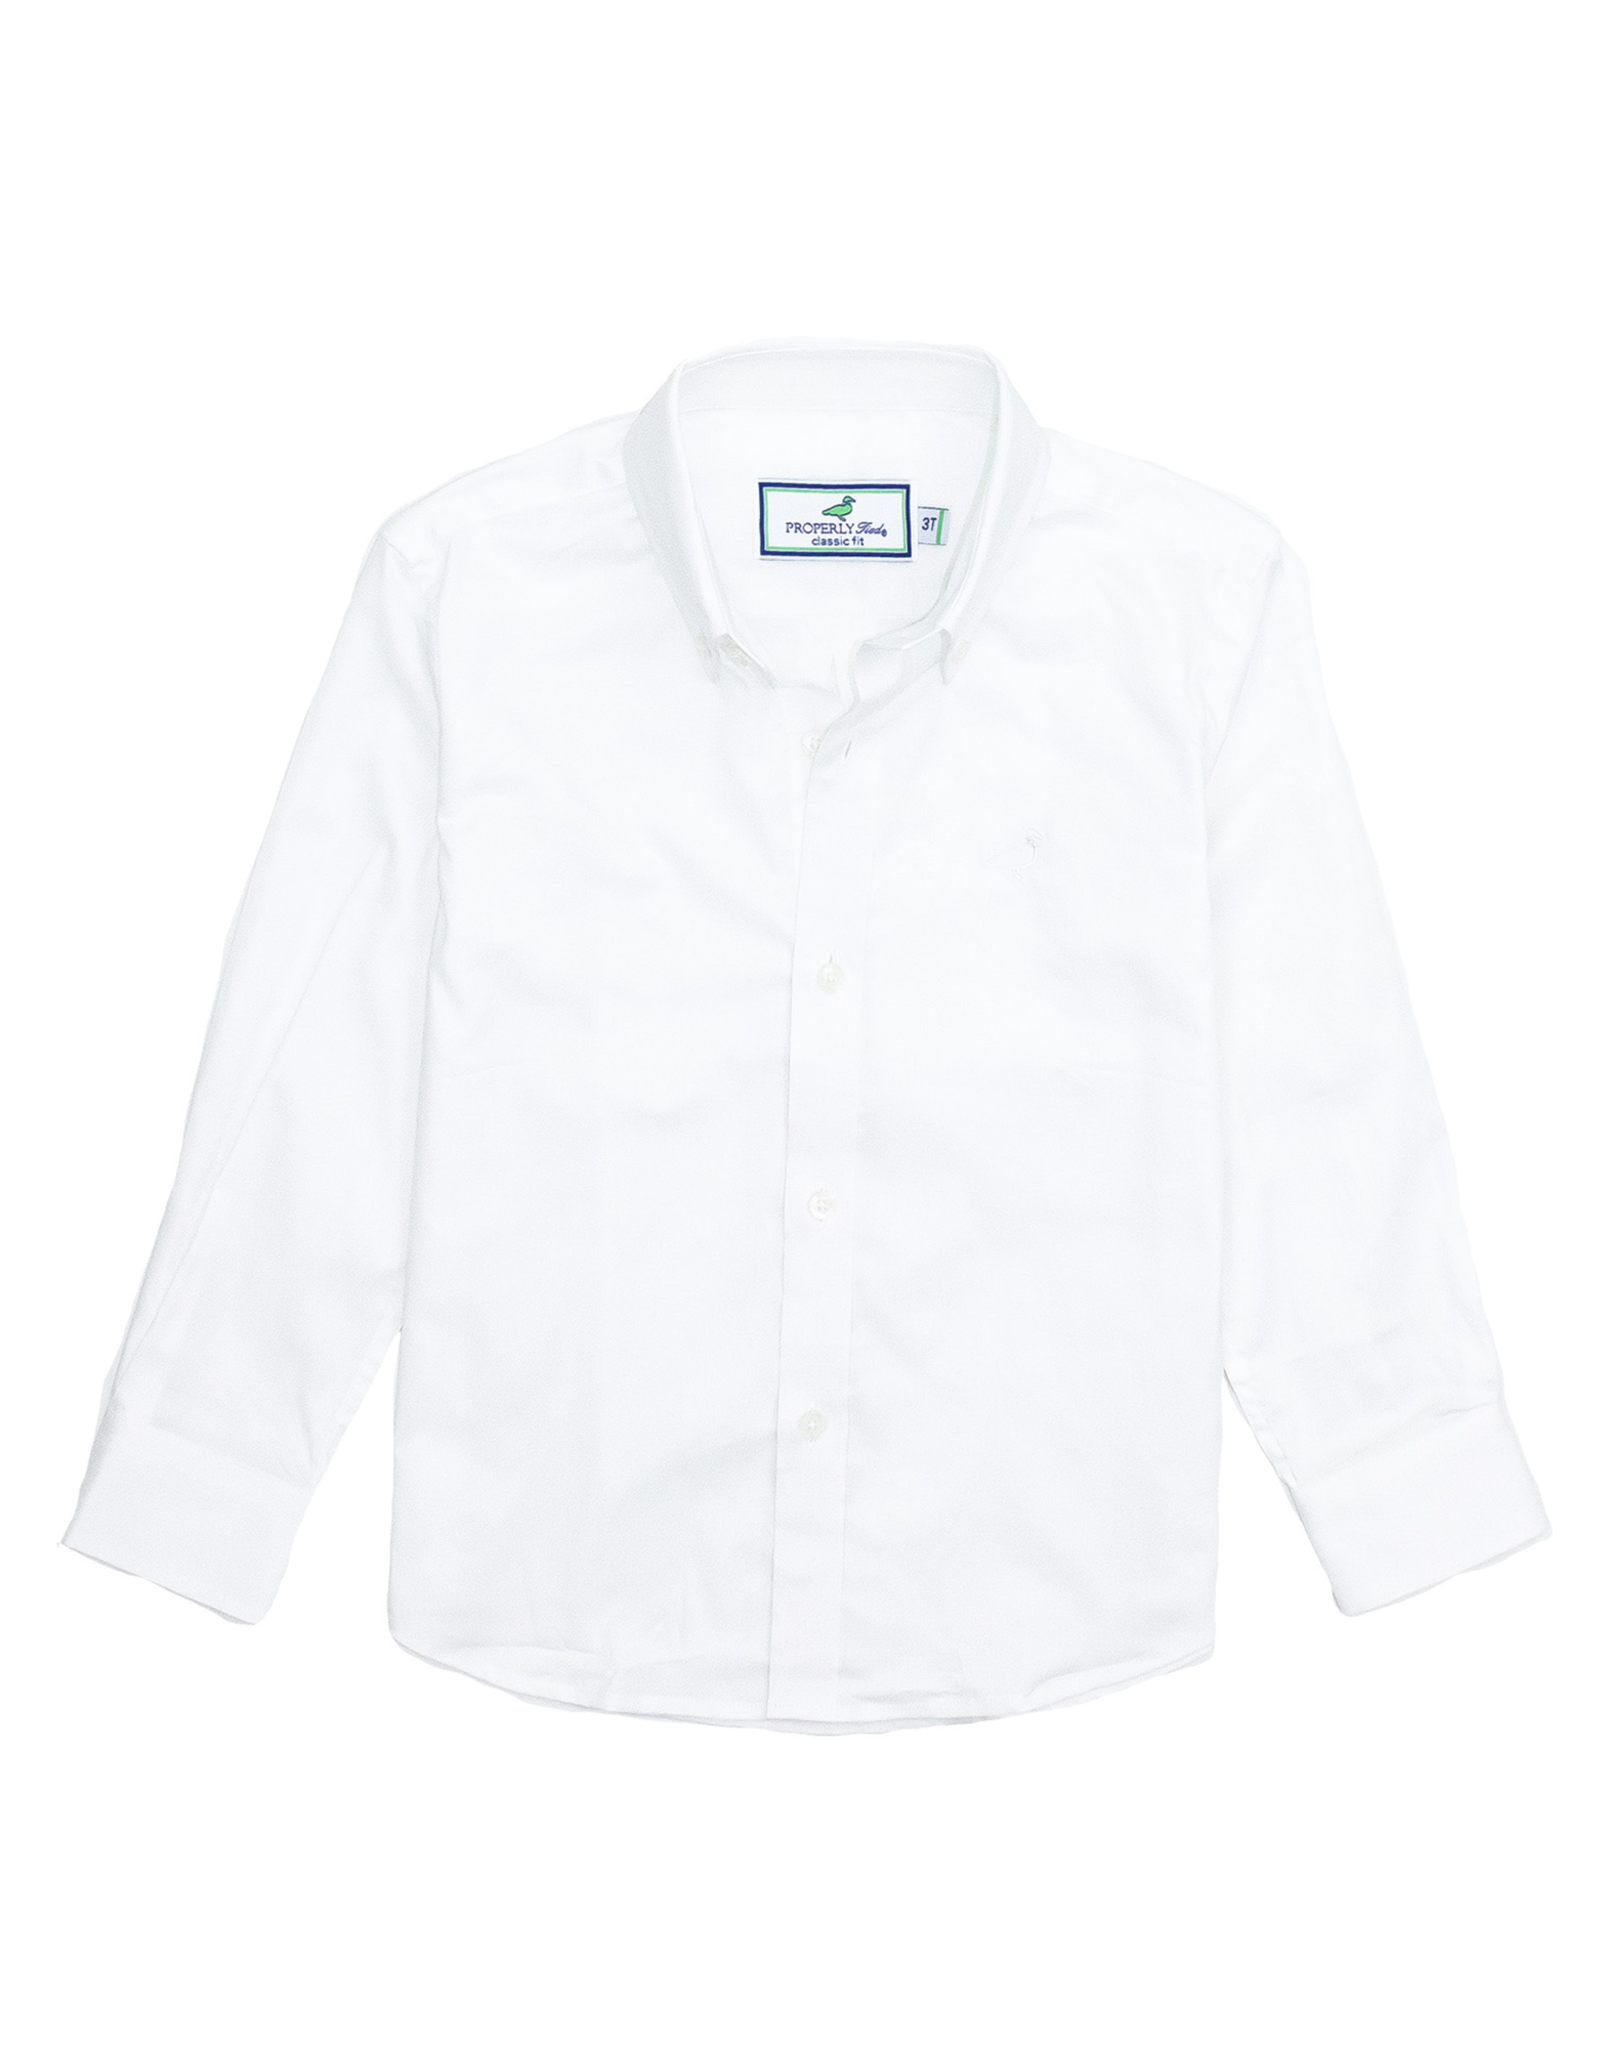 Properly Tied PT24 Park Avenue White Dress Shirt